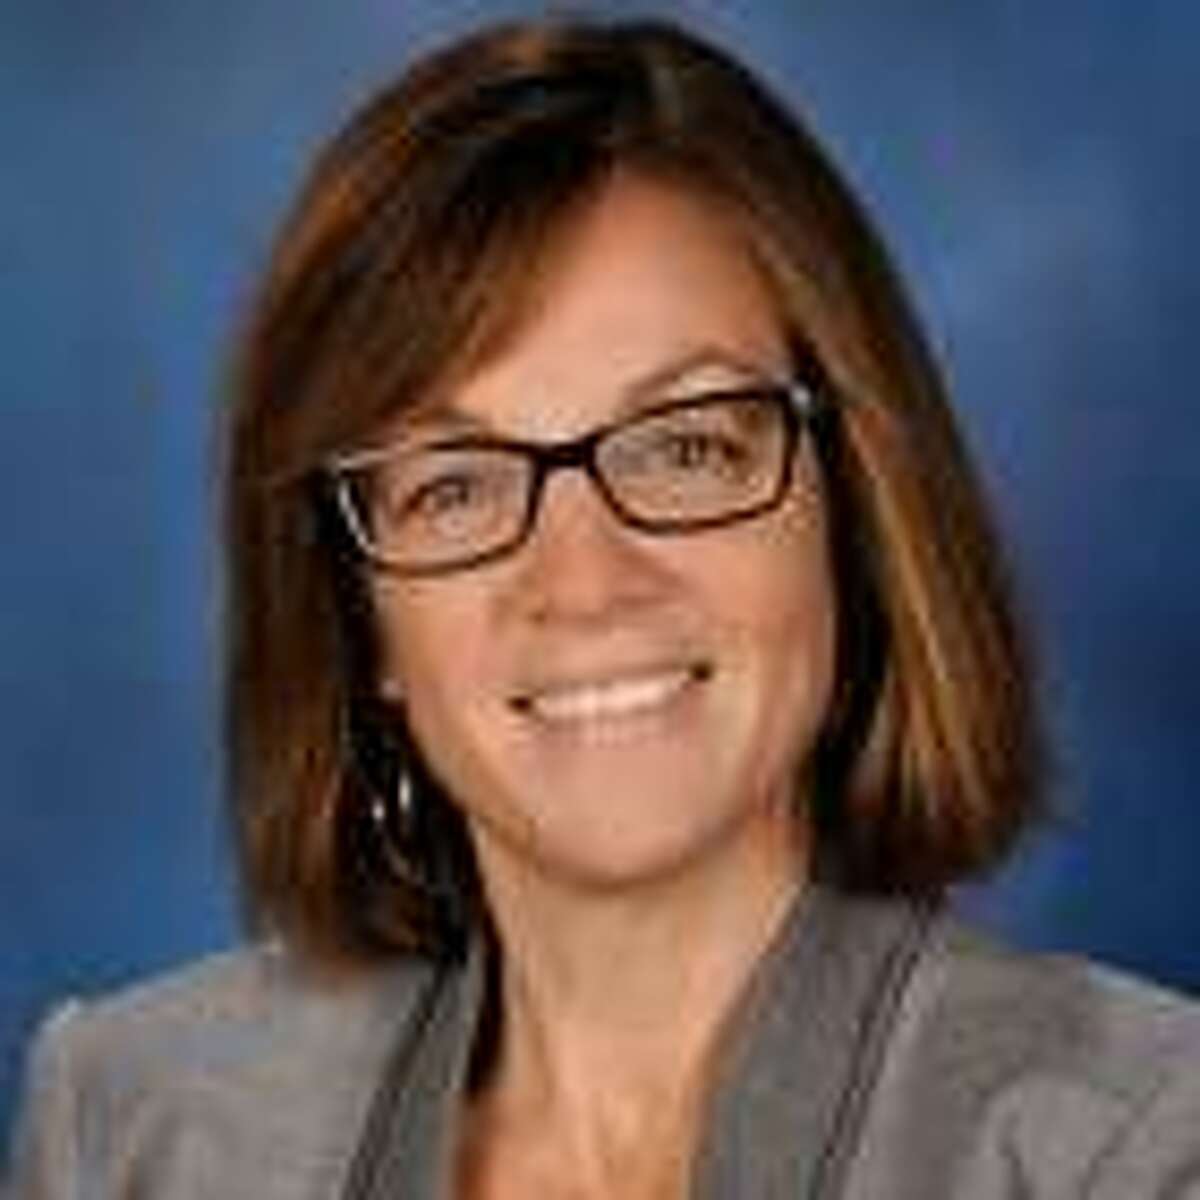 State Rep. Katie Stuart, D-Edwardsville